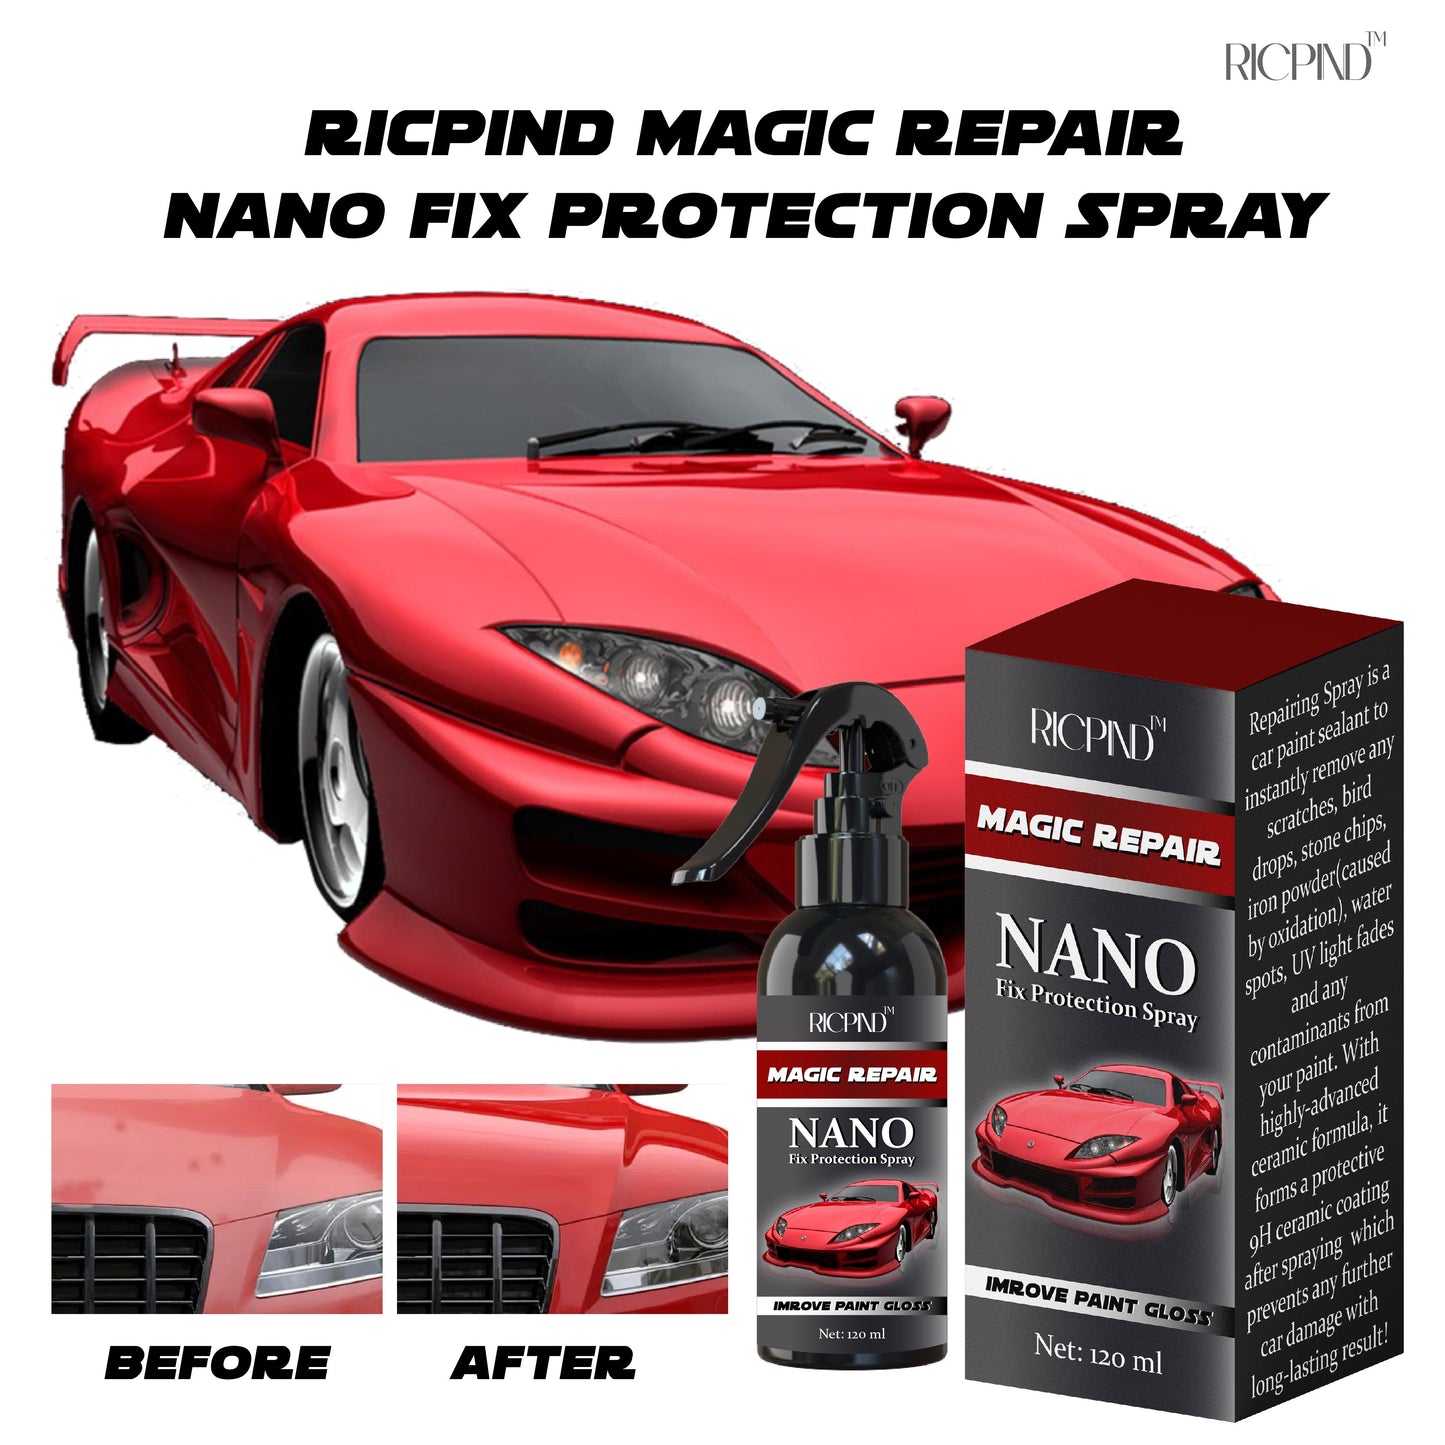 RICPIND Magic Repair Nano Fix Protection Spray